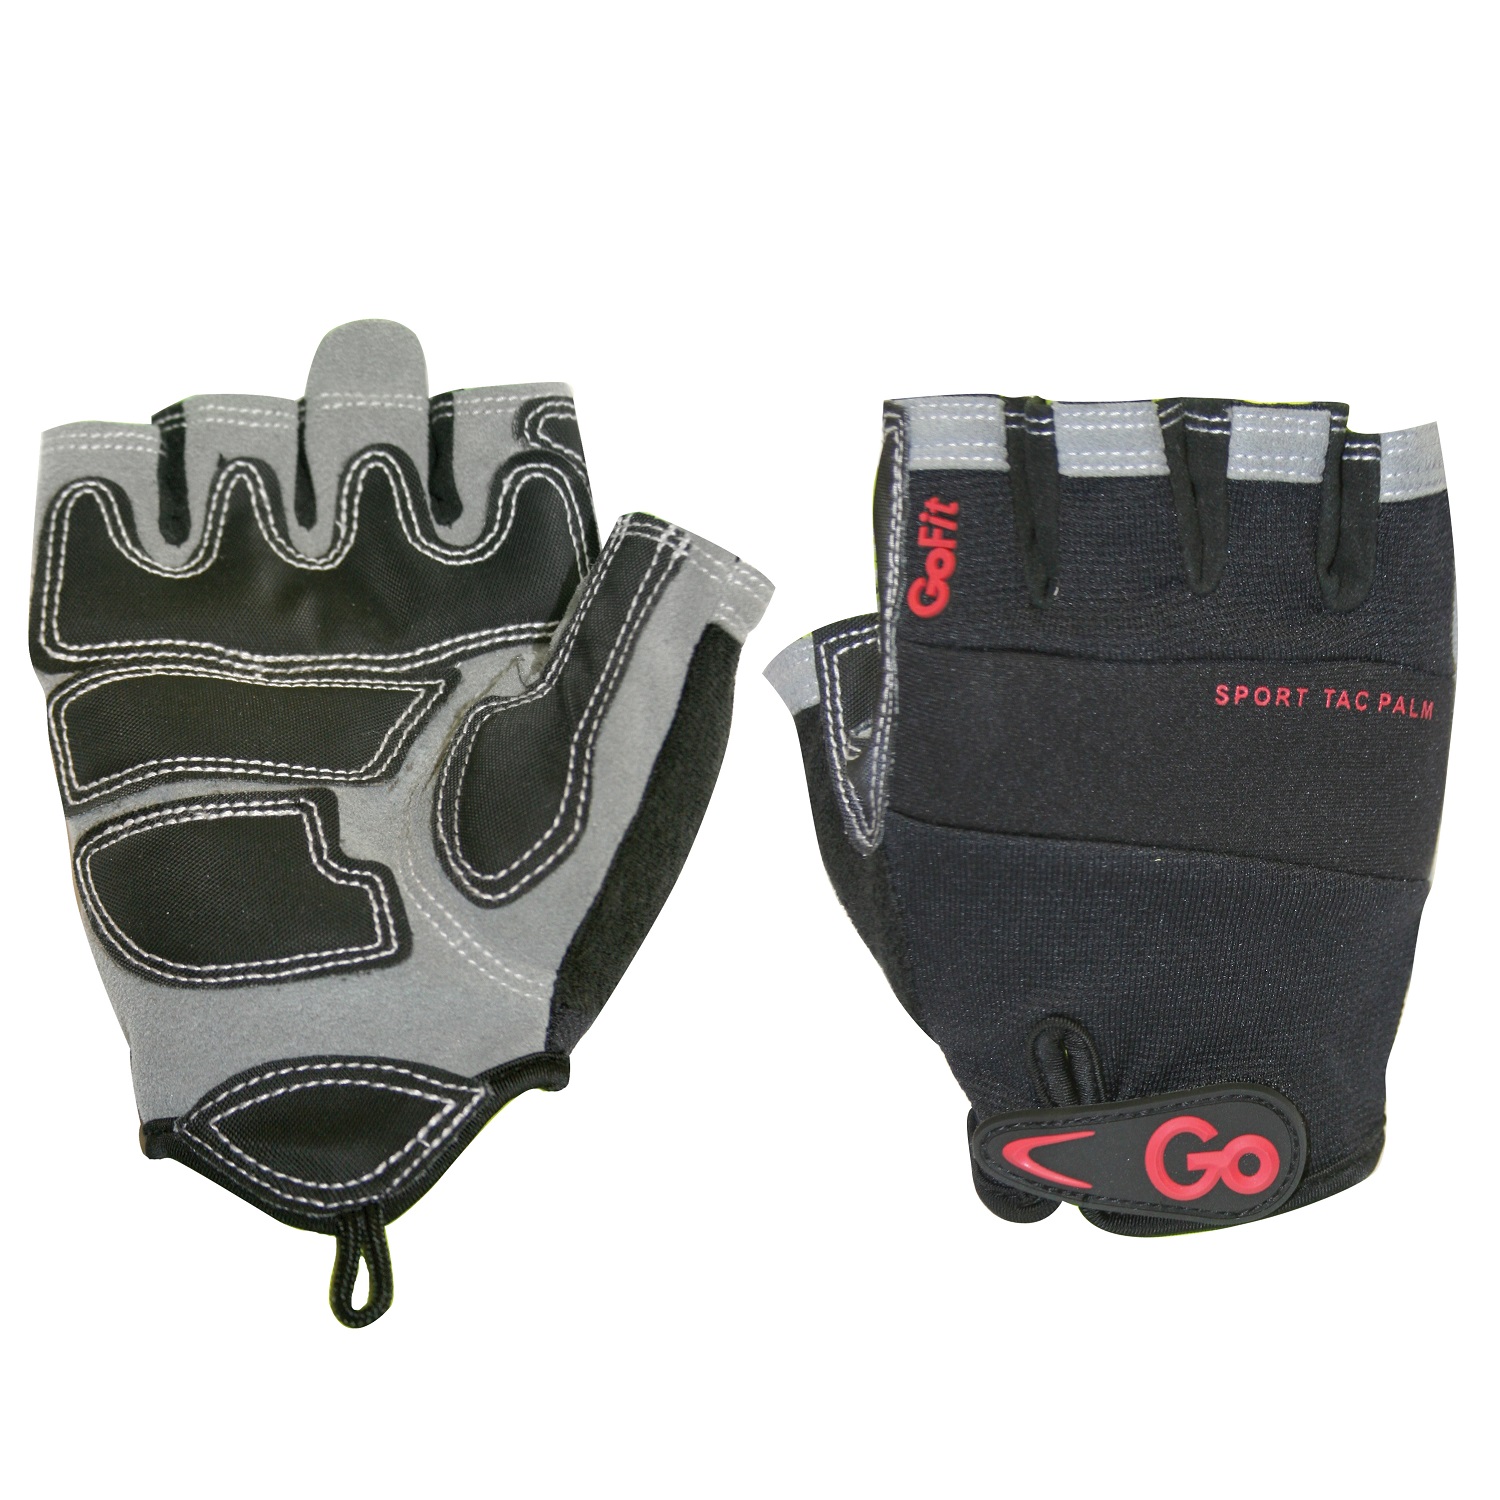 GoFit Men's Pro Sport-Tac Glove - Black/Gray/Red Accent - L